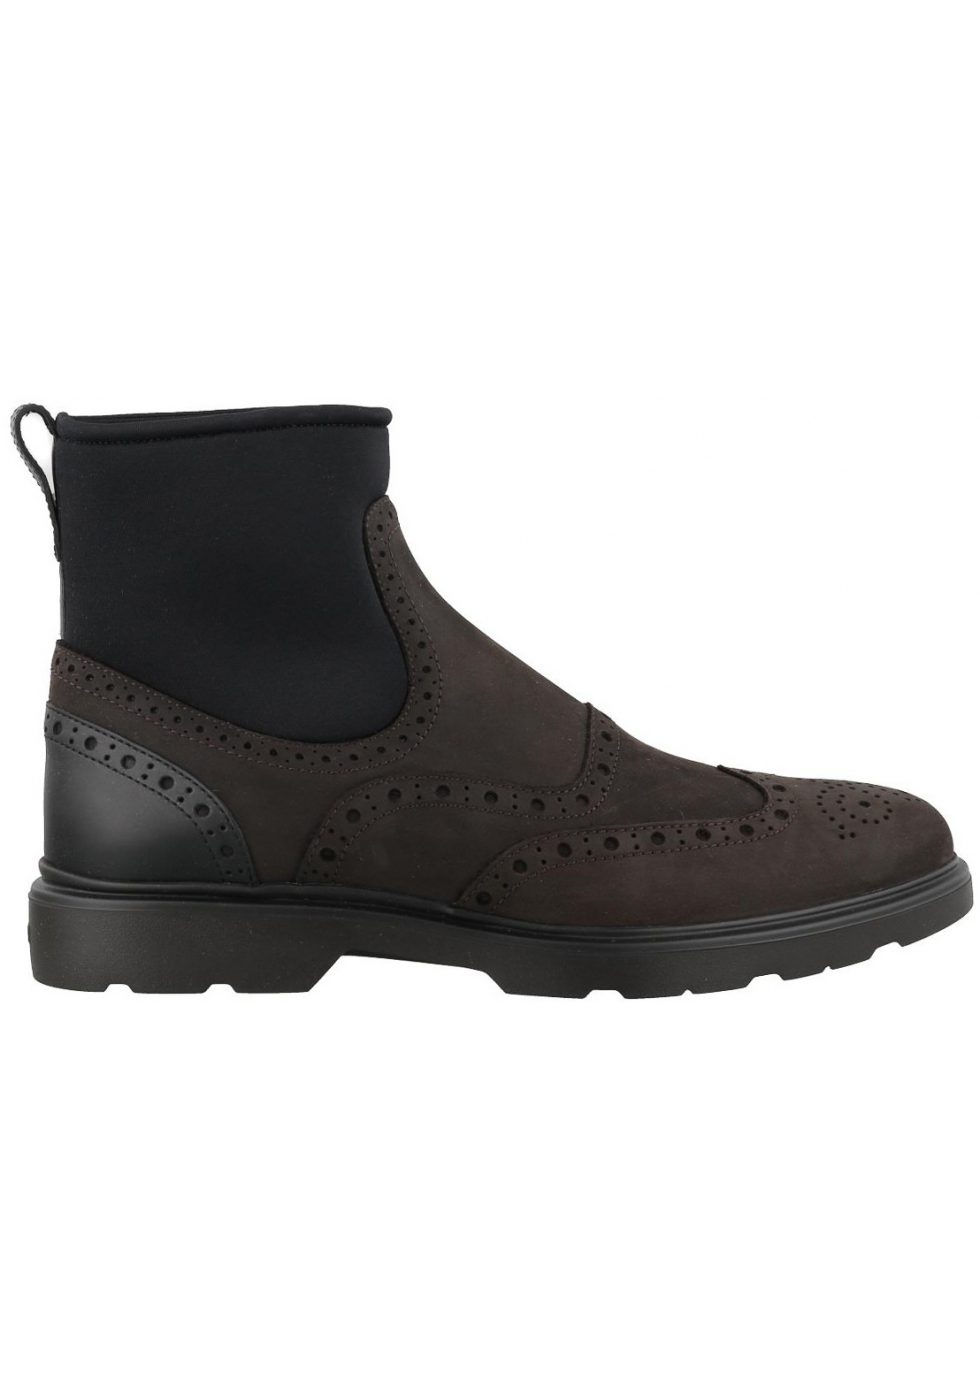 Hogan Men's fashion round toe laceless chukka boots in brown nubuck